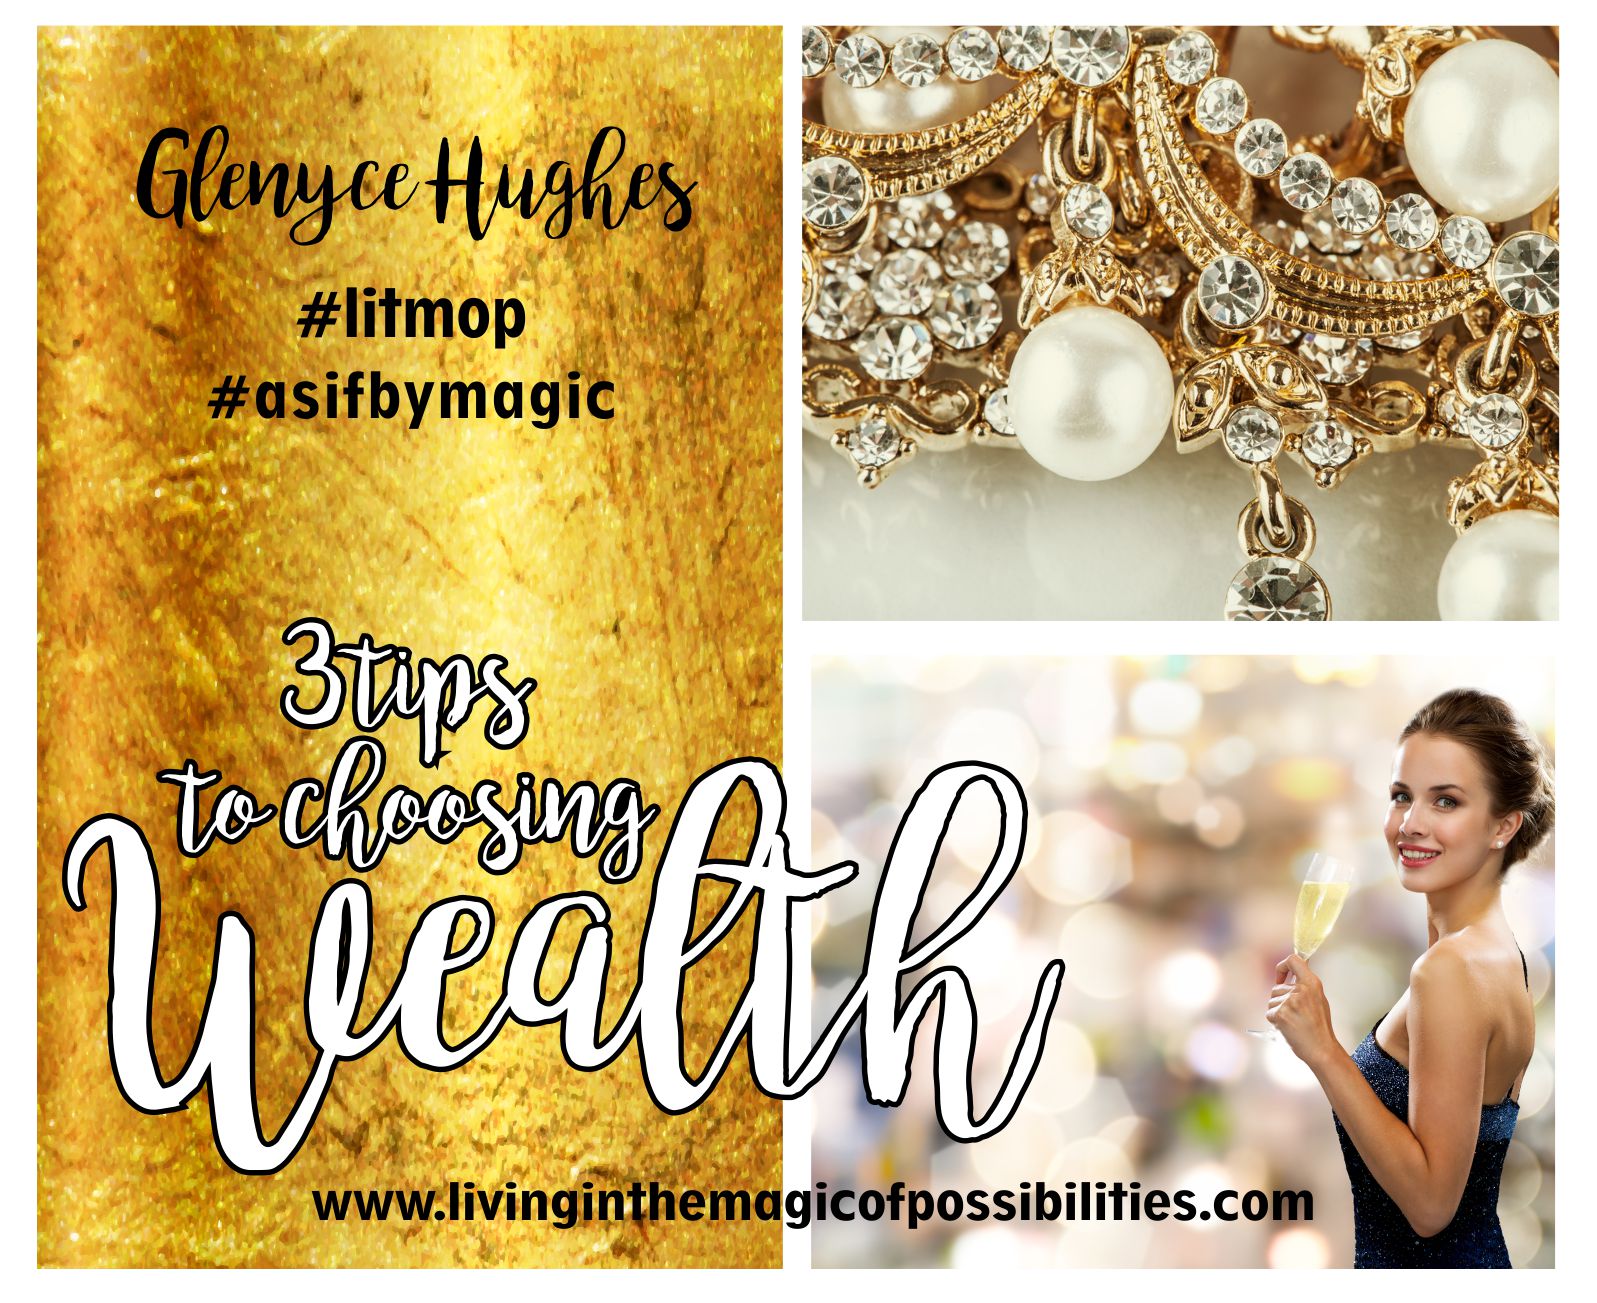 3 Tips to Choosing Wealth - Glenyce Hughes